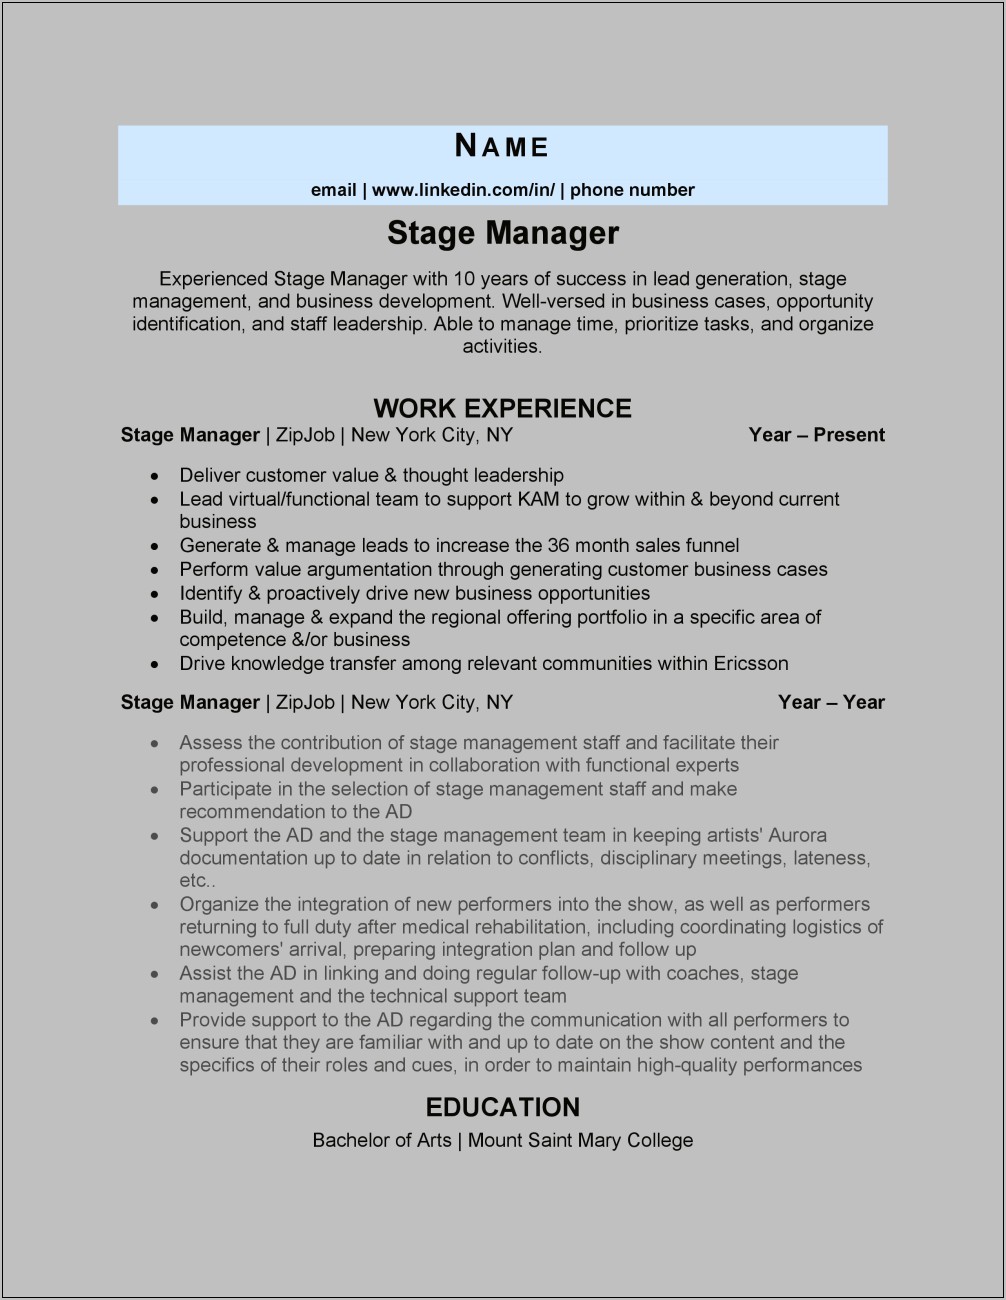 Stage Manager Resume Skills Summary